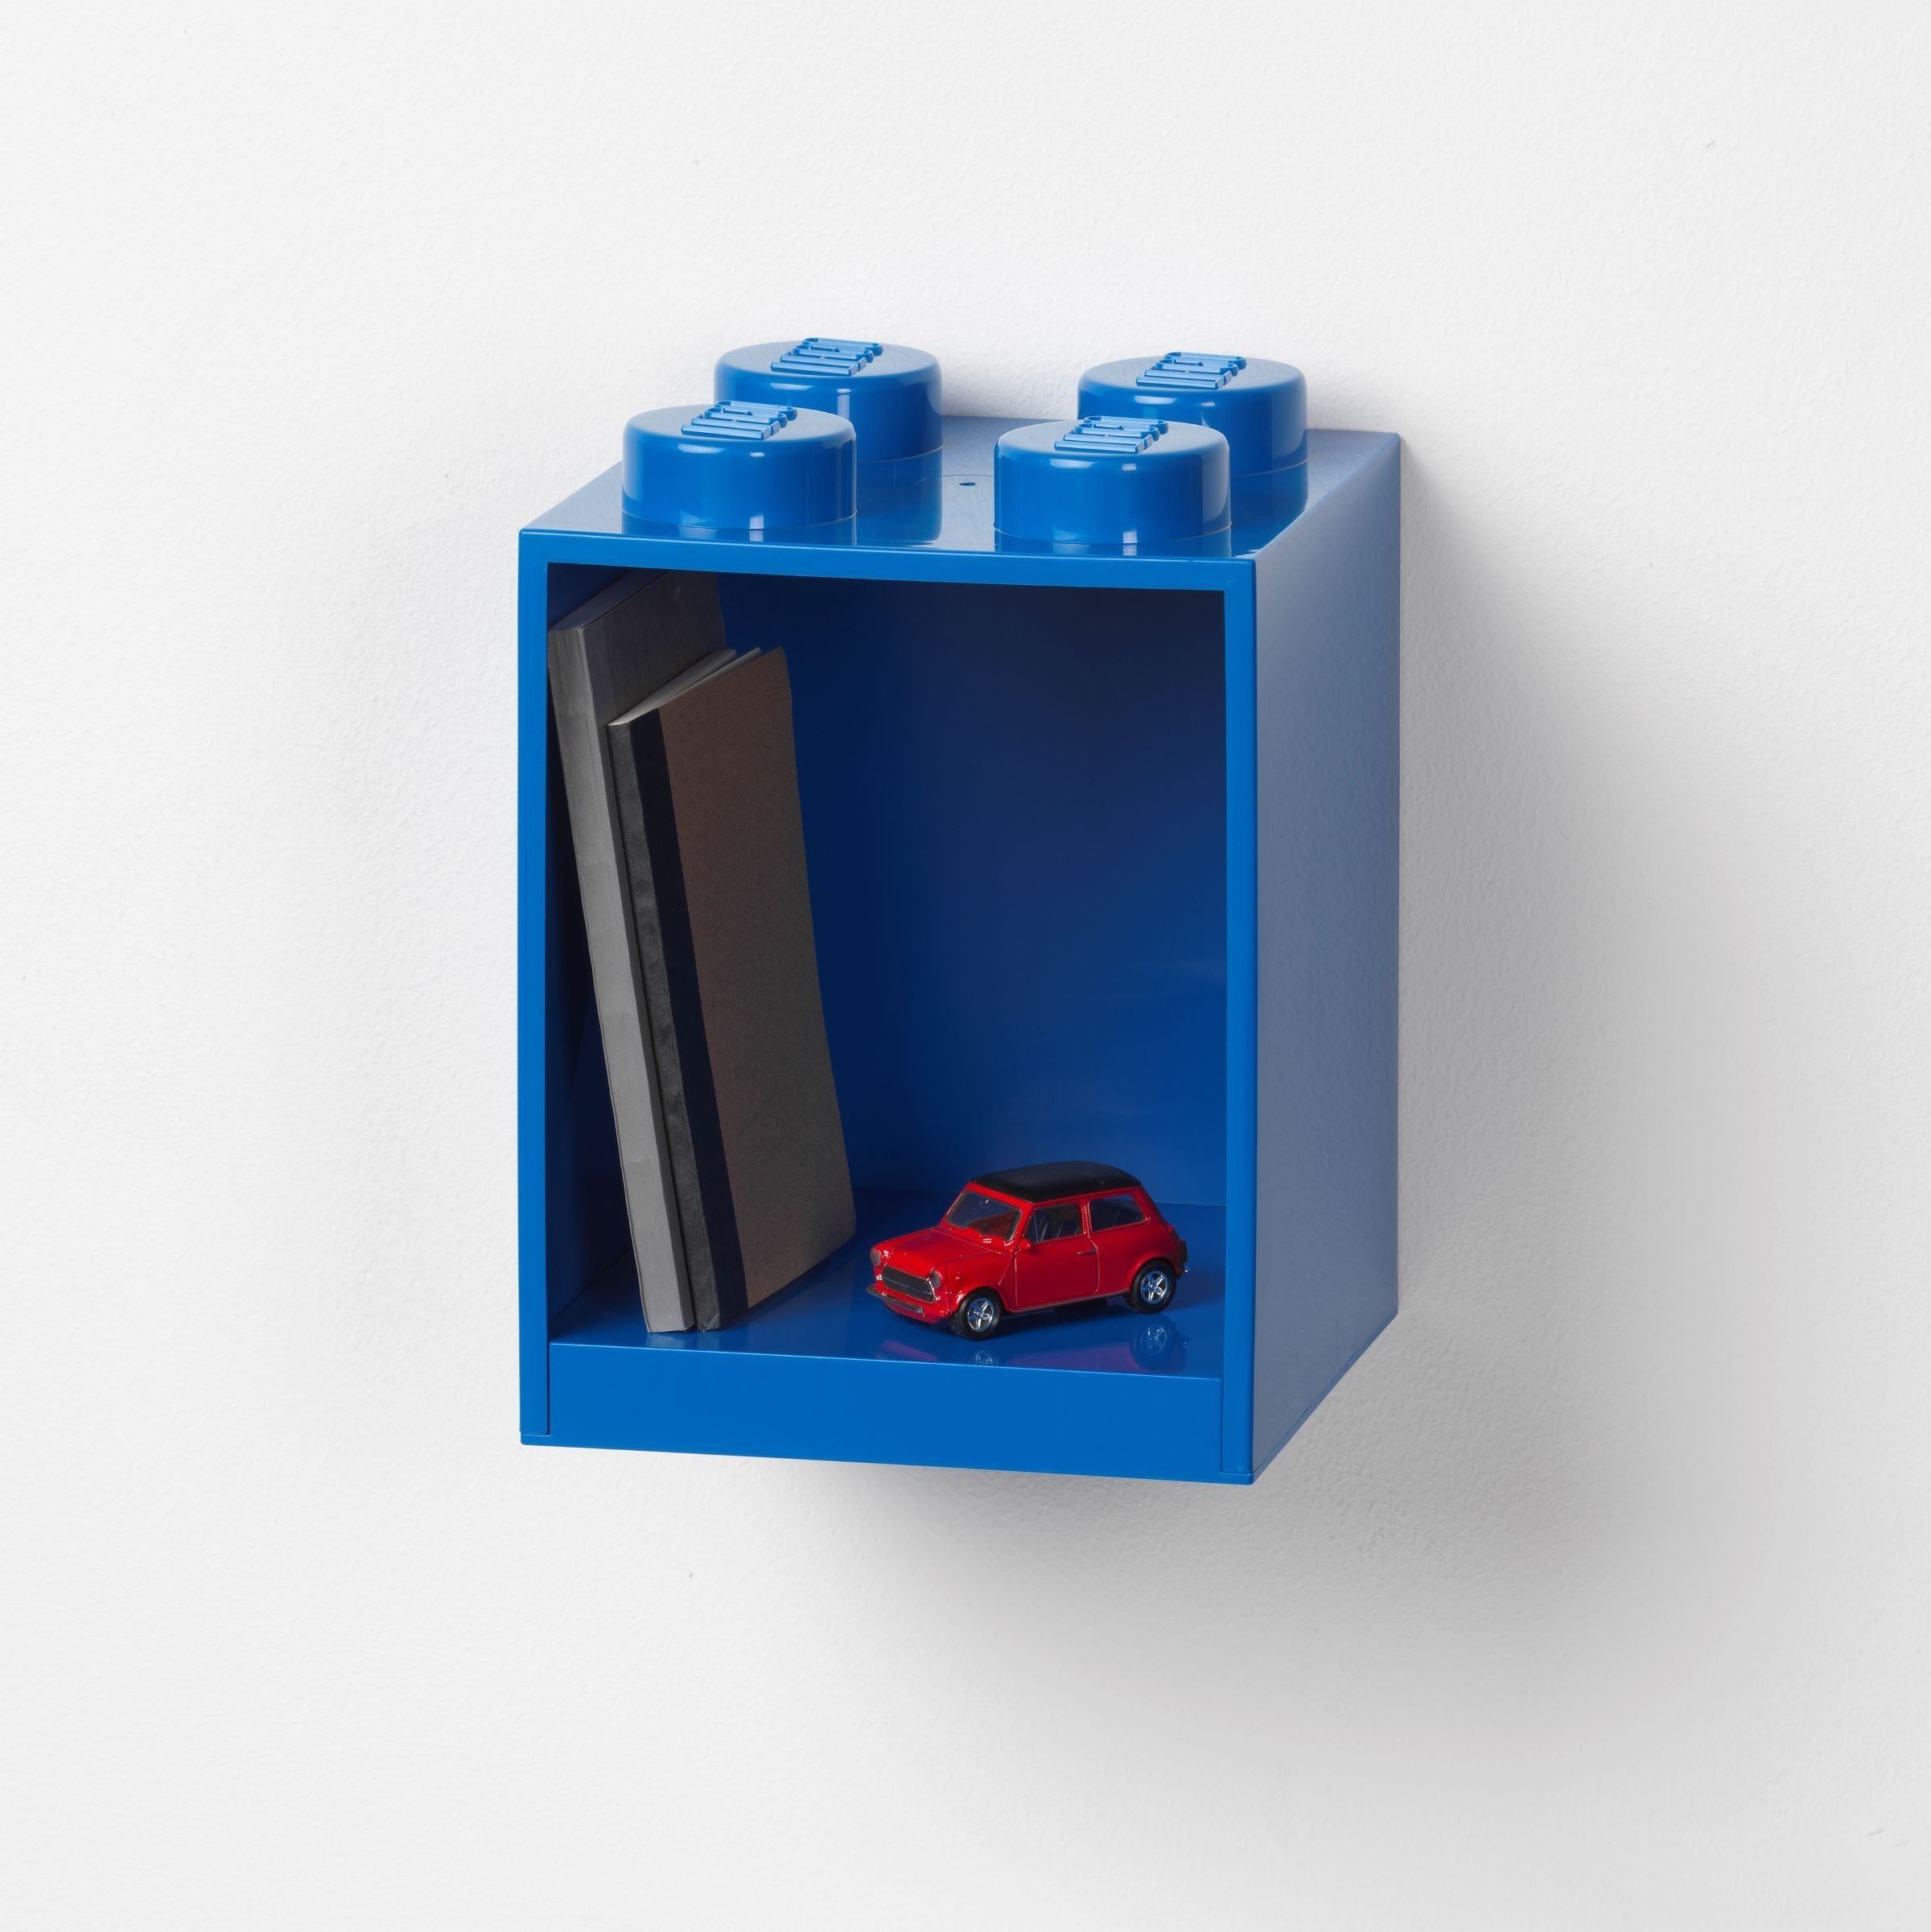 LEGO Gear 5007280 Steinregal mit 4 Noppen in Blau LEGO_5007280_alt2.jpg